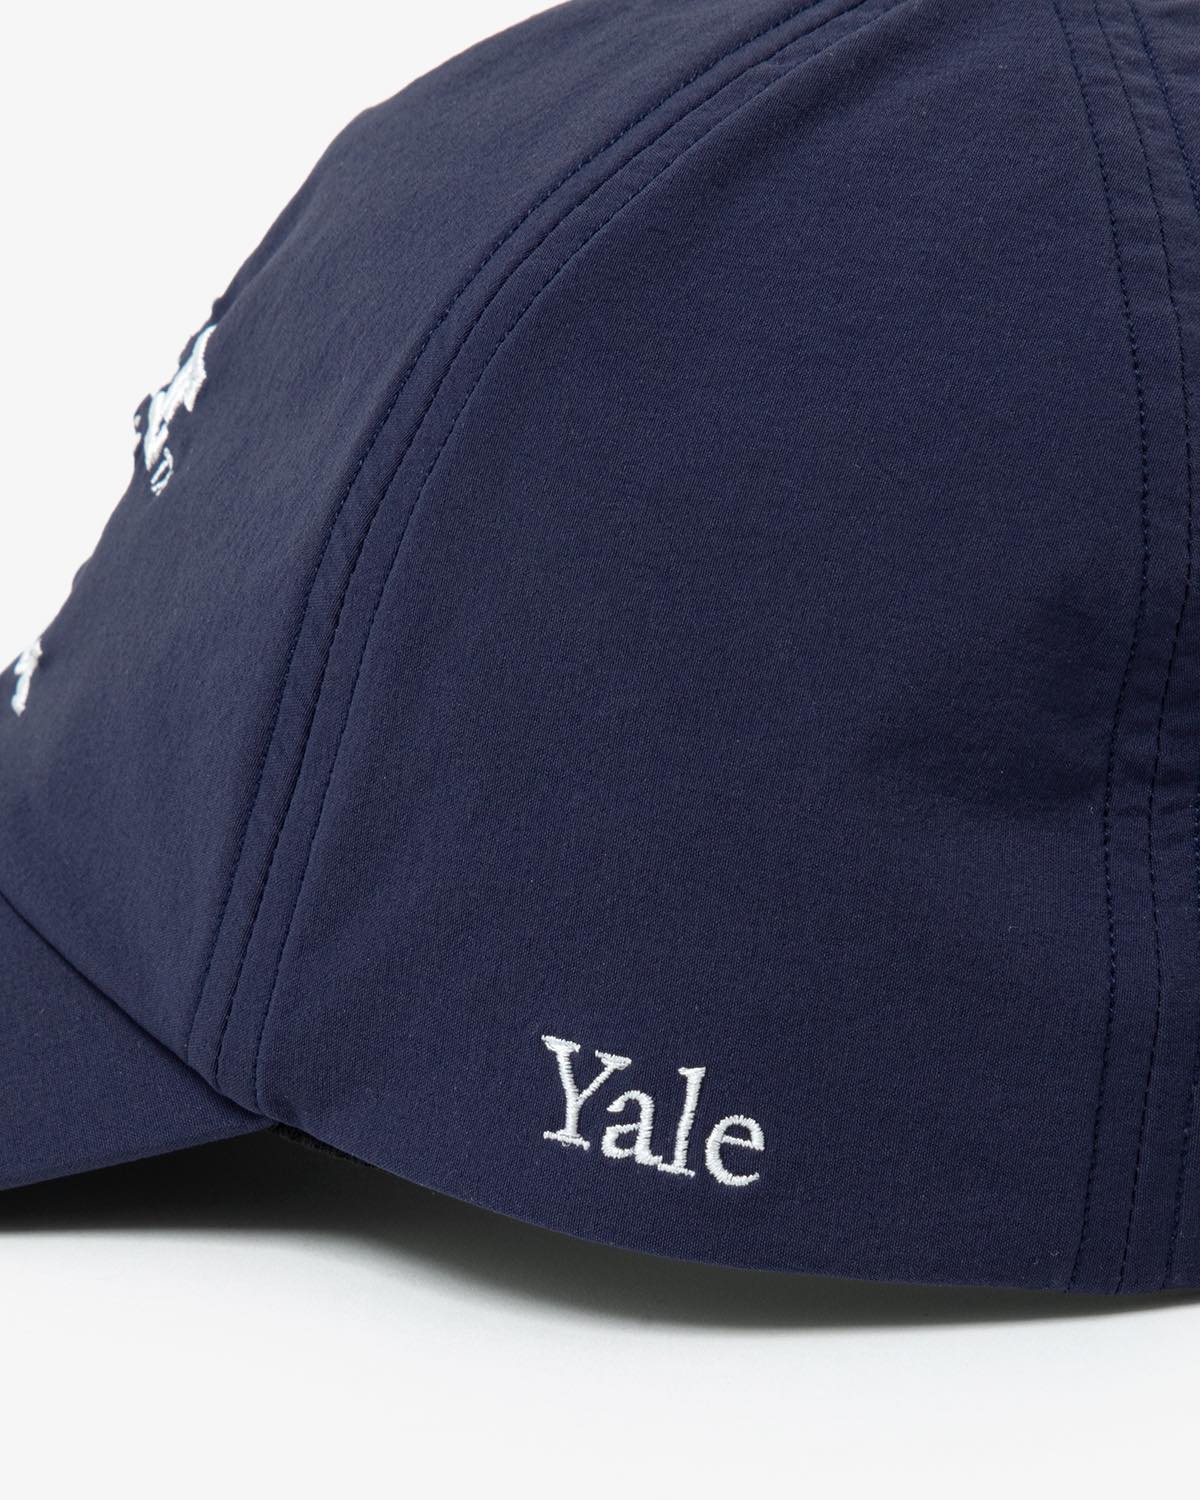 YALE TRACK CAP (WOMEN'S)